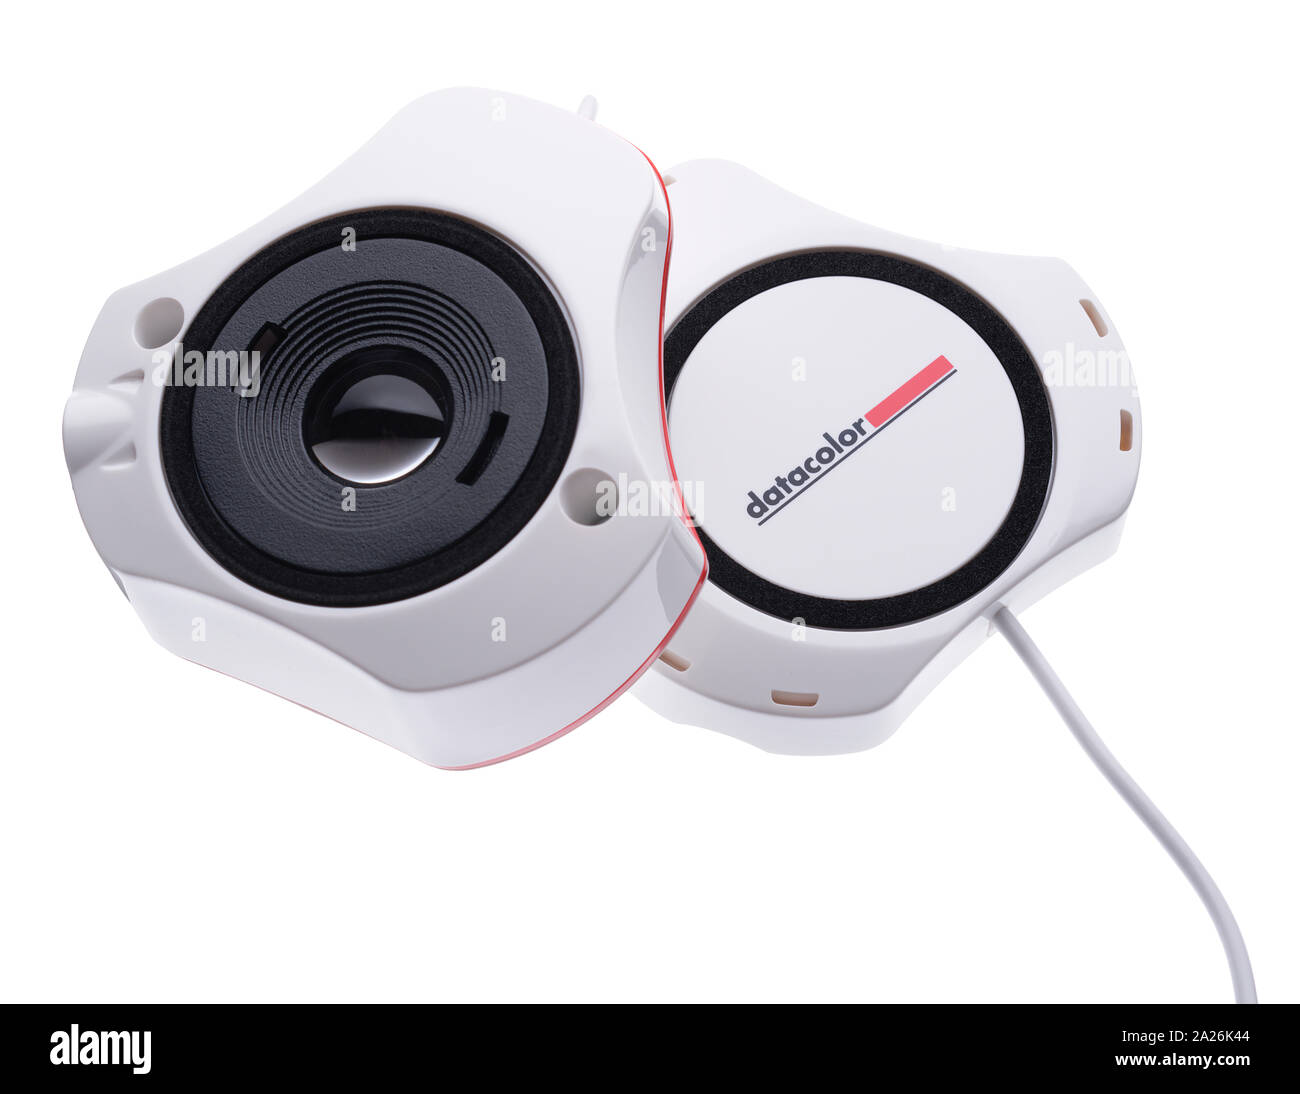 Datacolor Spyder X pro monitor calibration device Stock Photo - Alamy